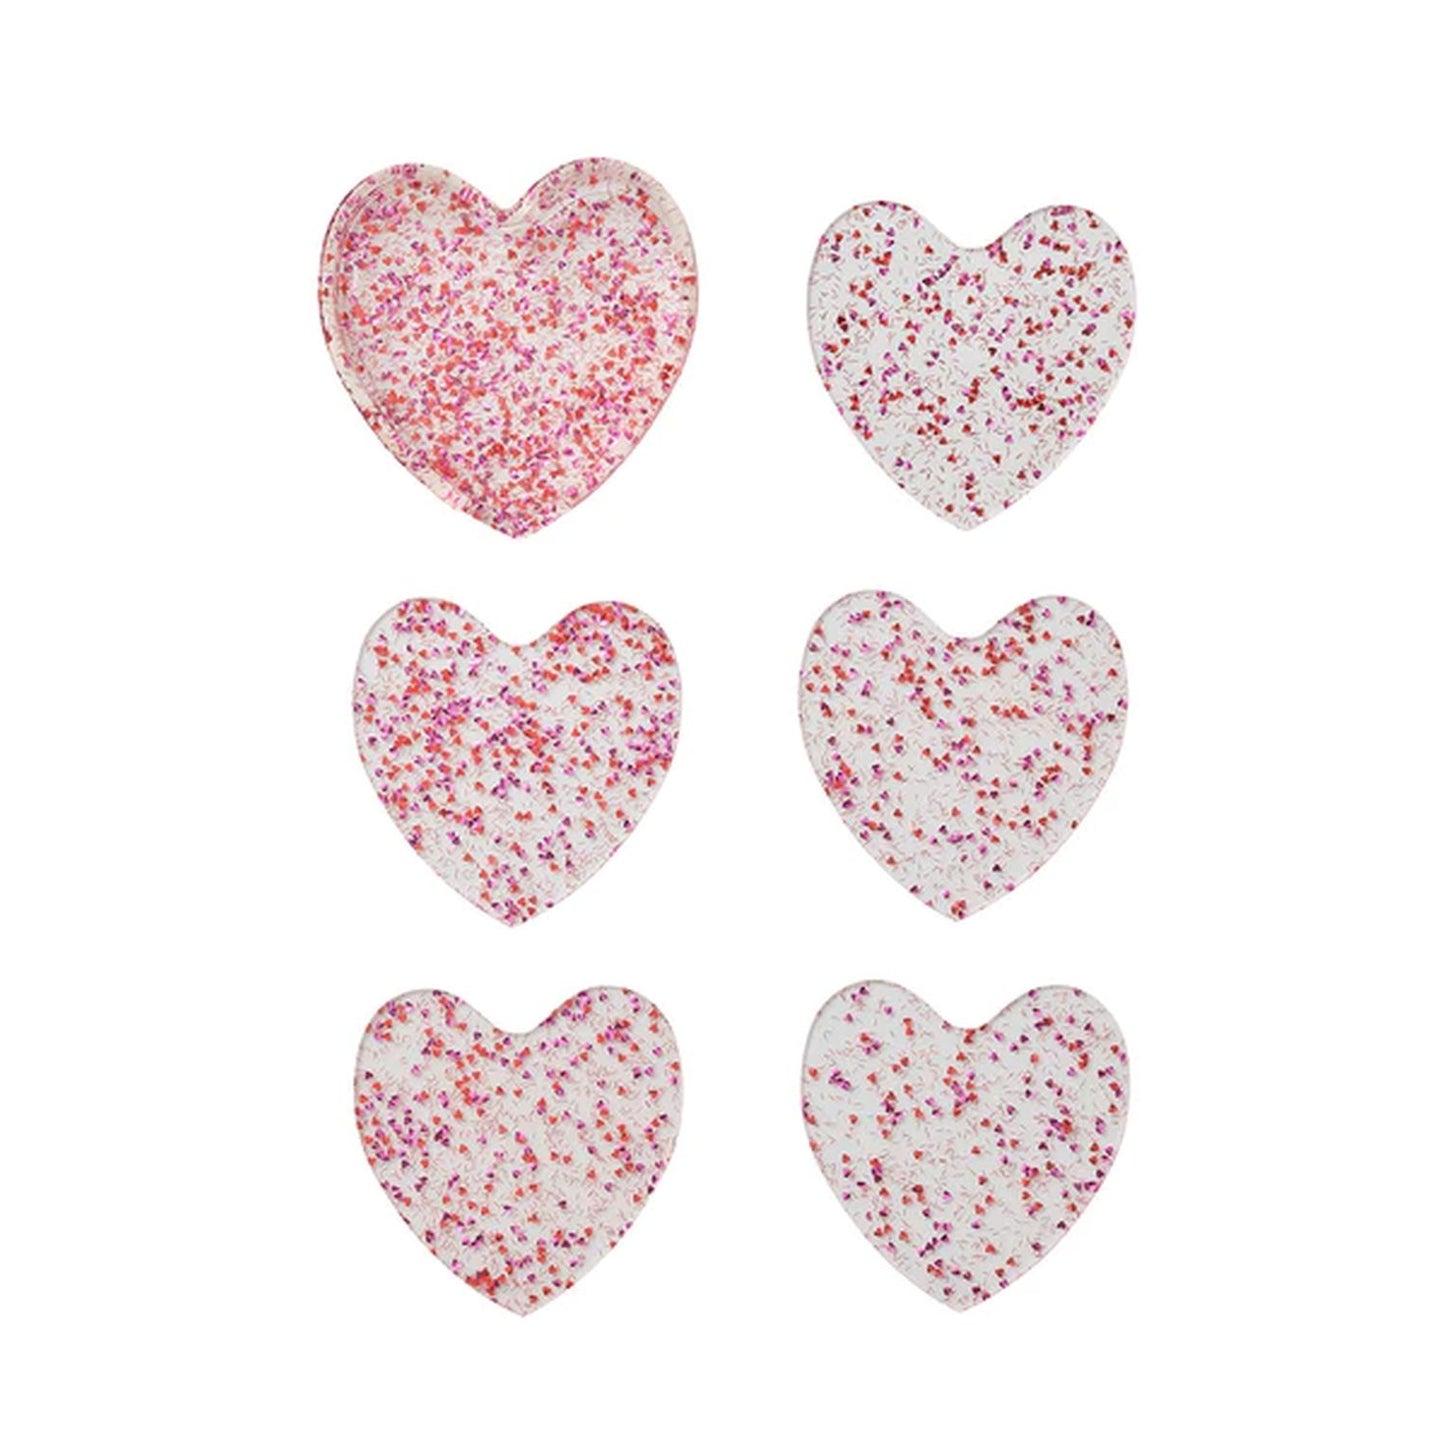 Kim Seybert Sweetheart Coasters in Pink & Red, Set of 6 in a Caddy